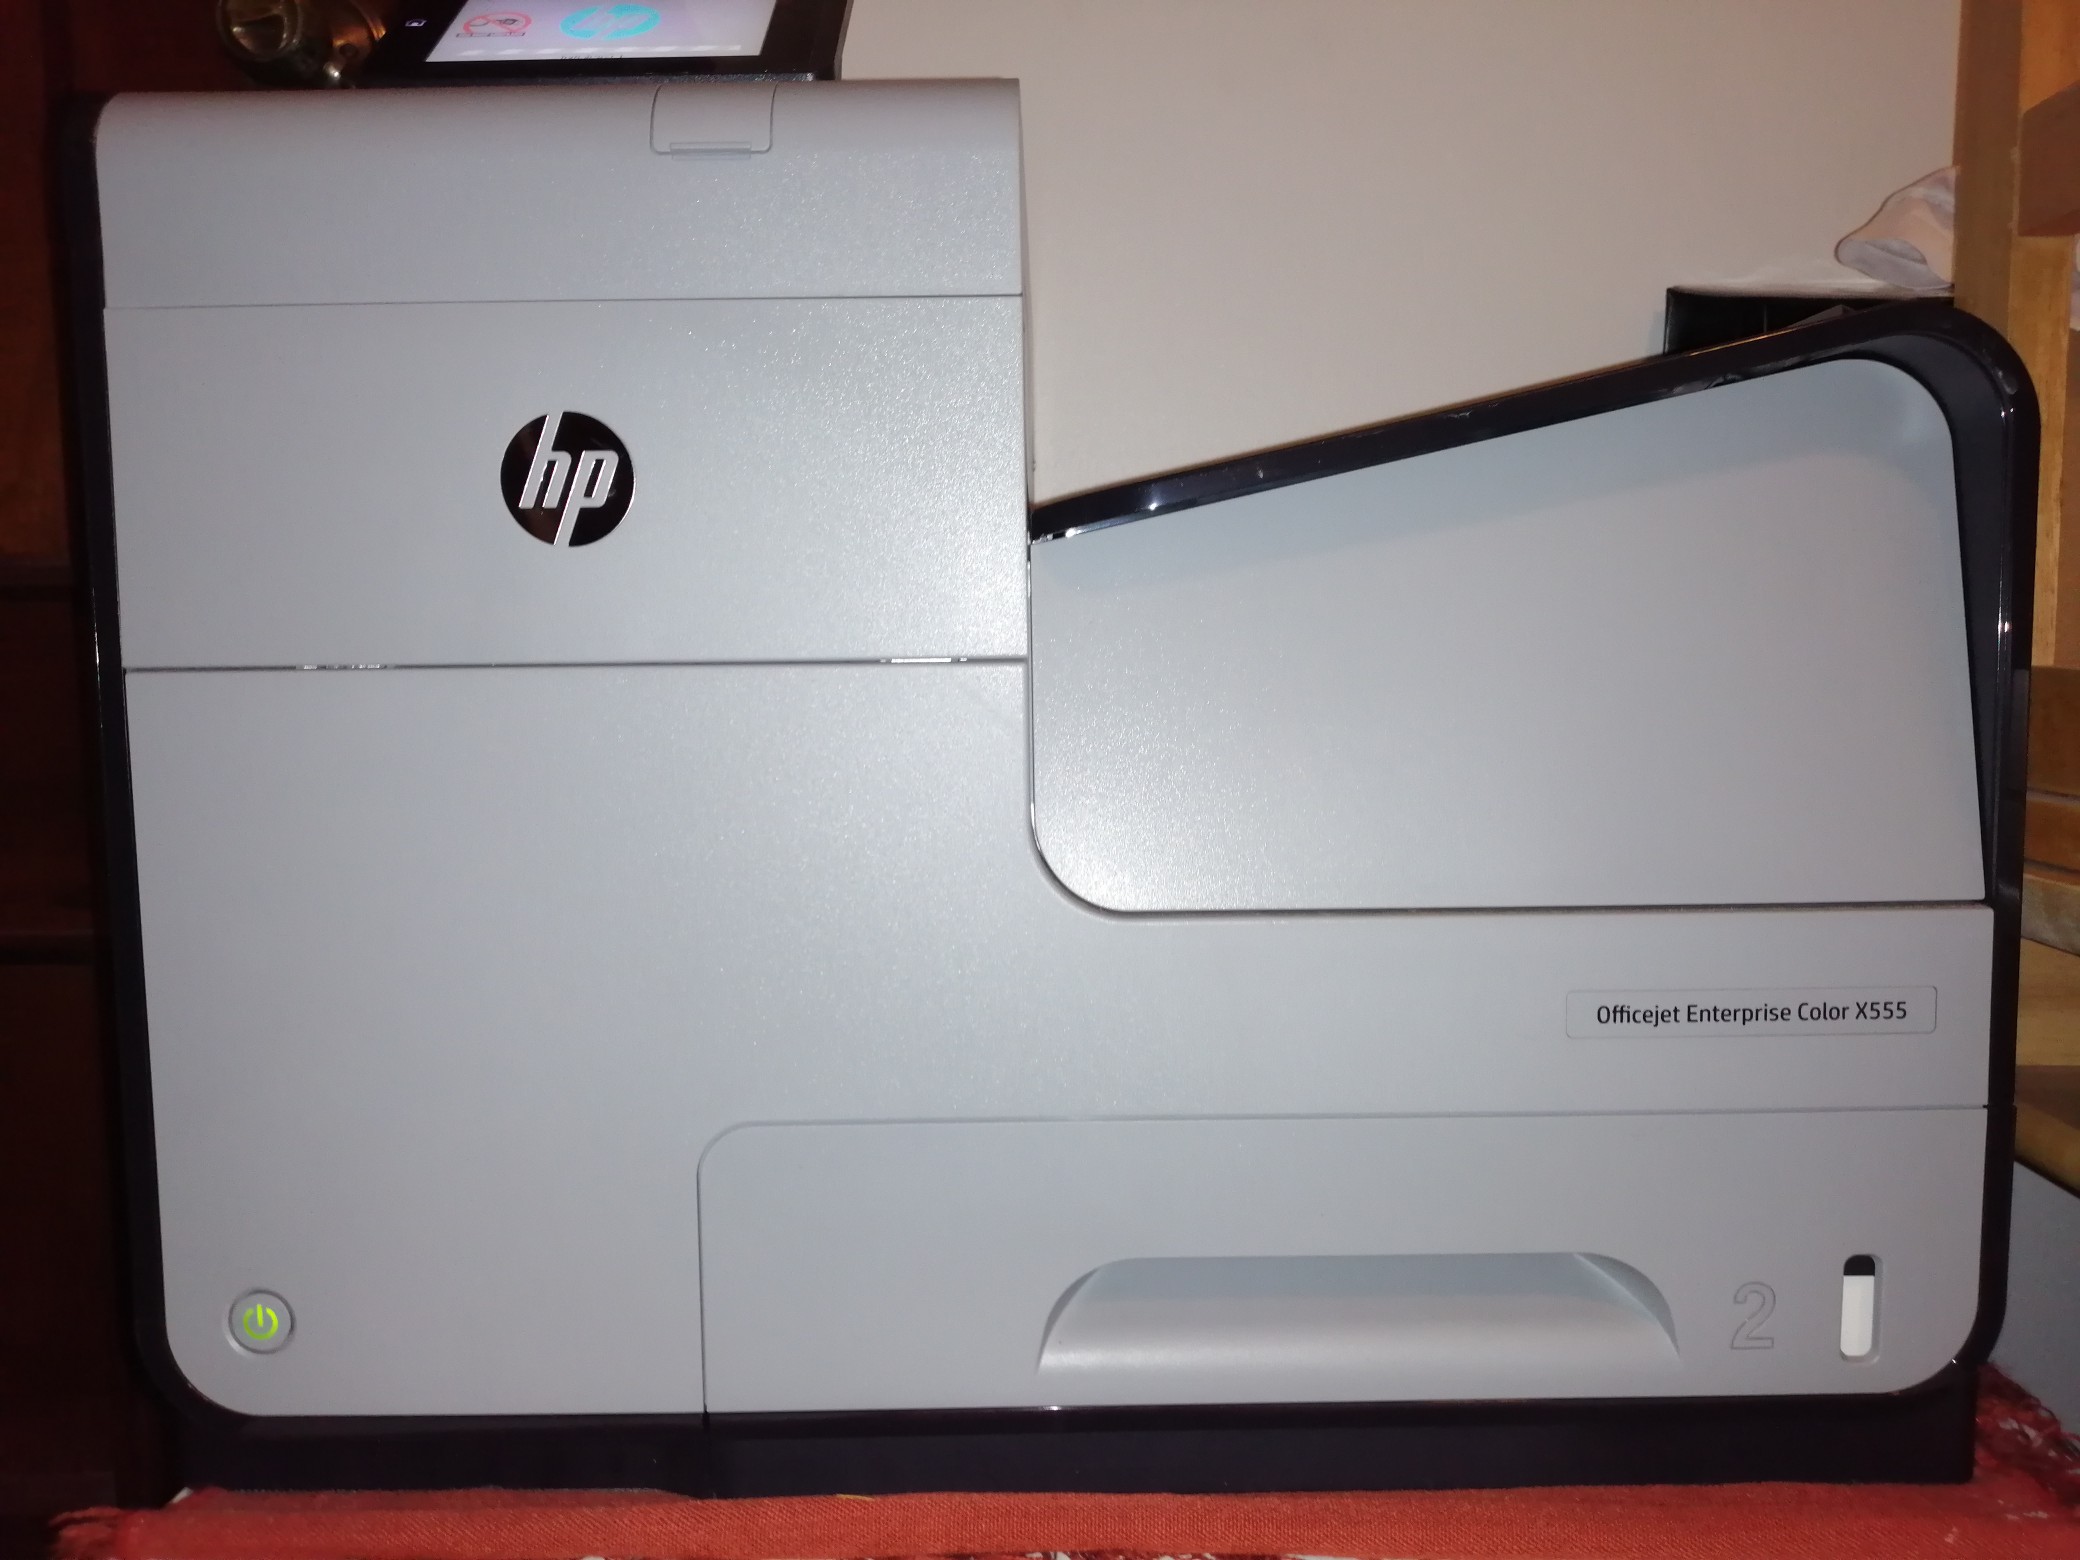 impresoras y scanners - Impresora HP Officejet X555 Color.